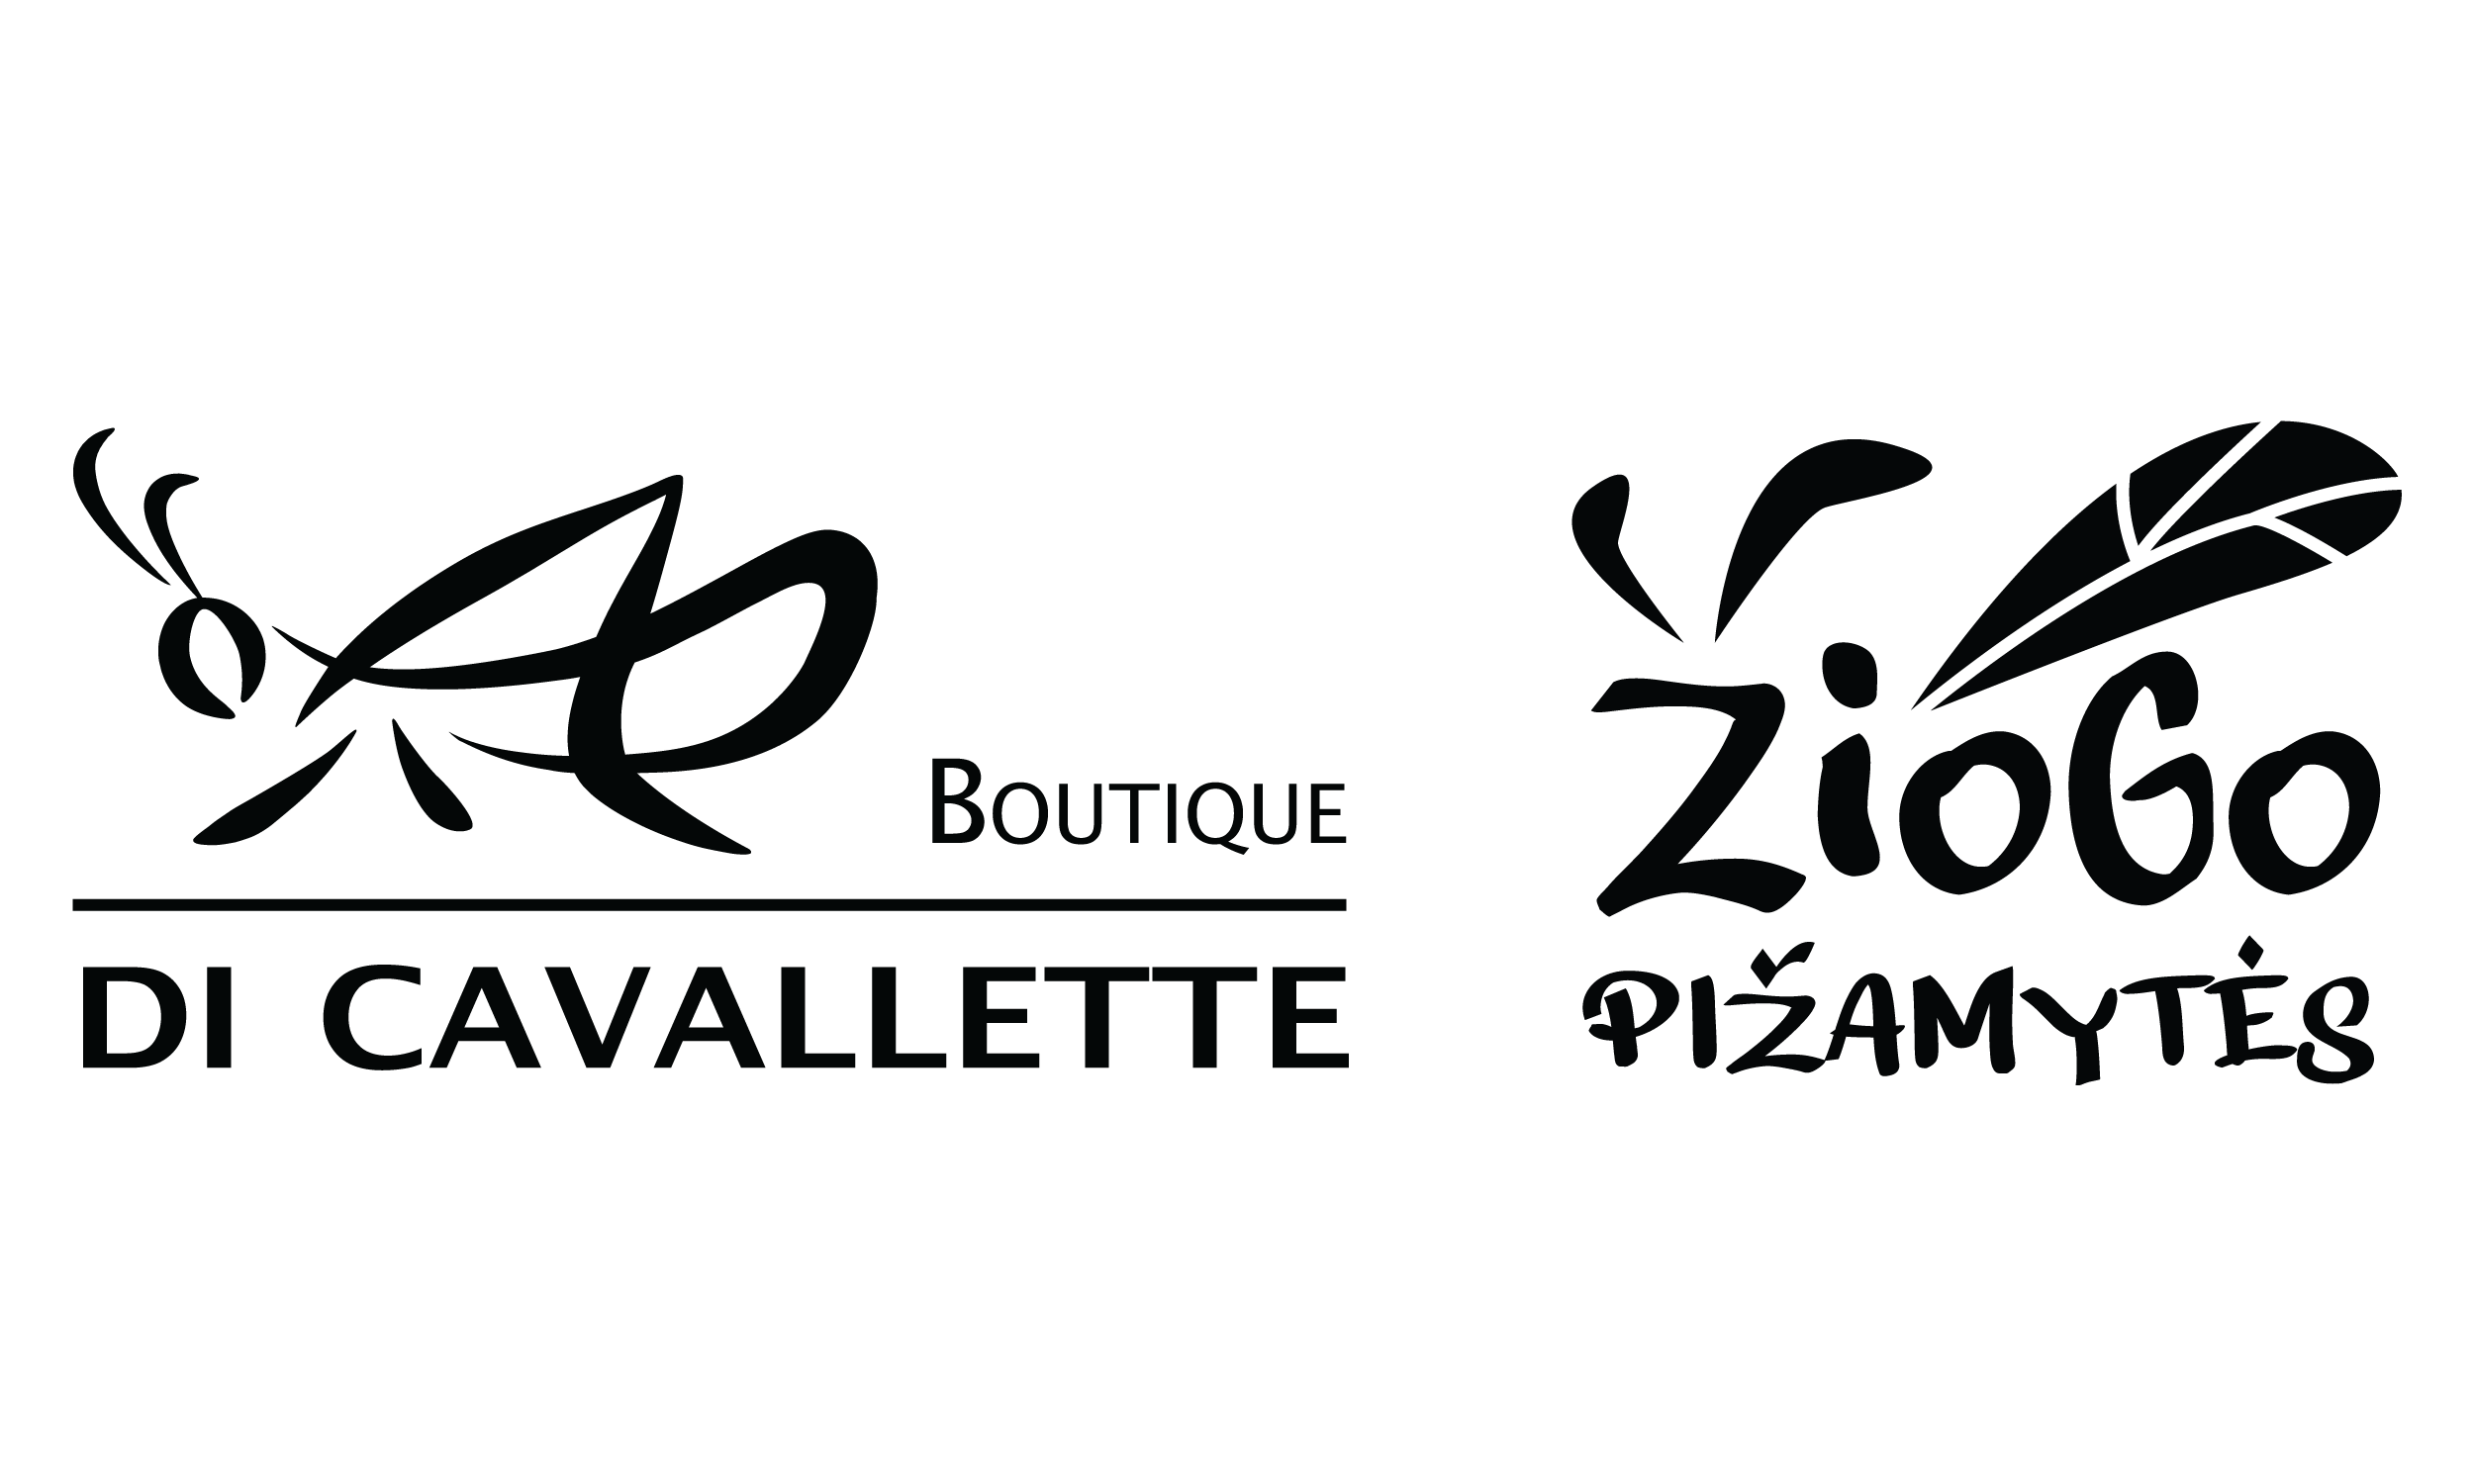 DiCavallette_ZiogoPizamytes_logo_